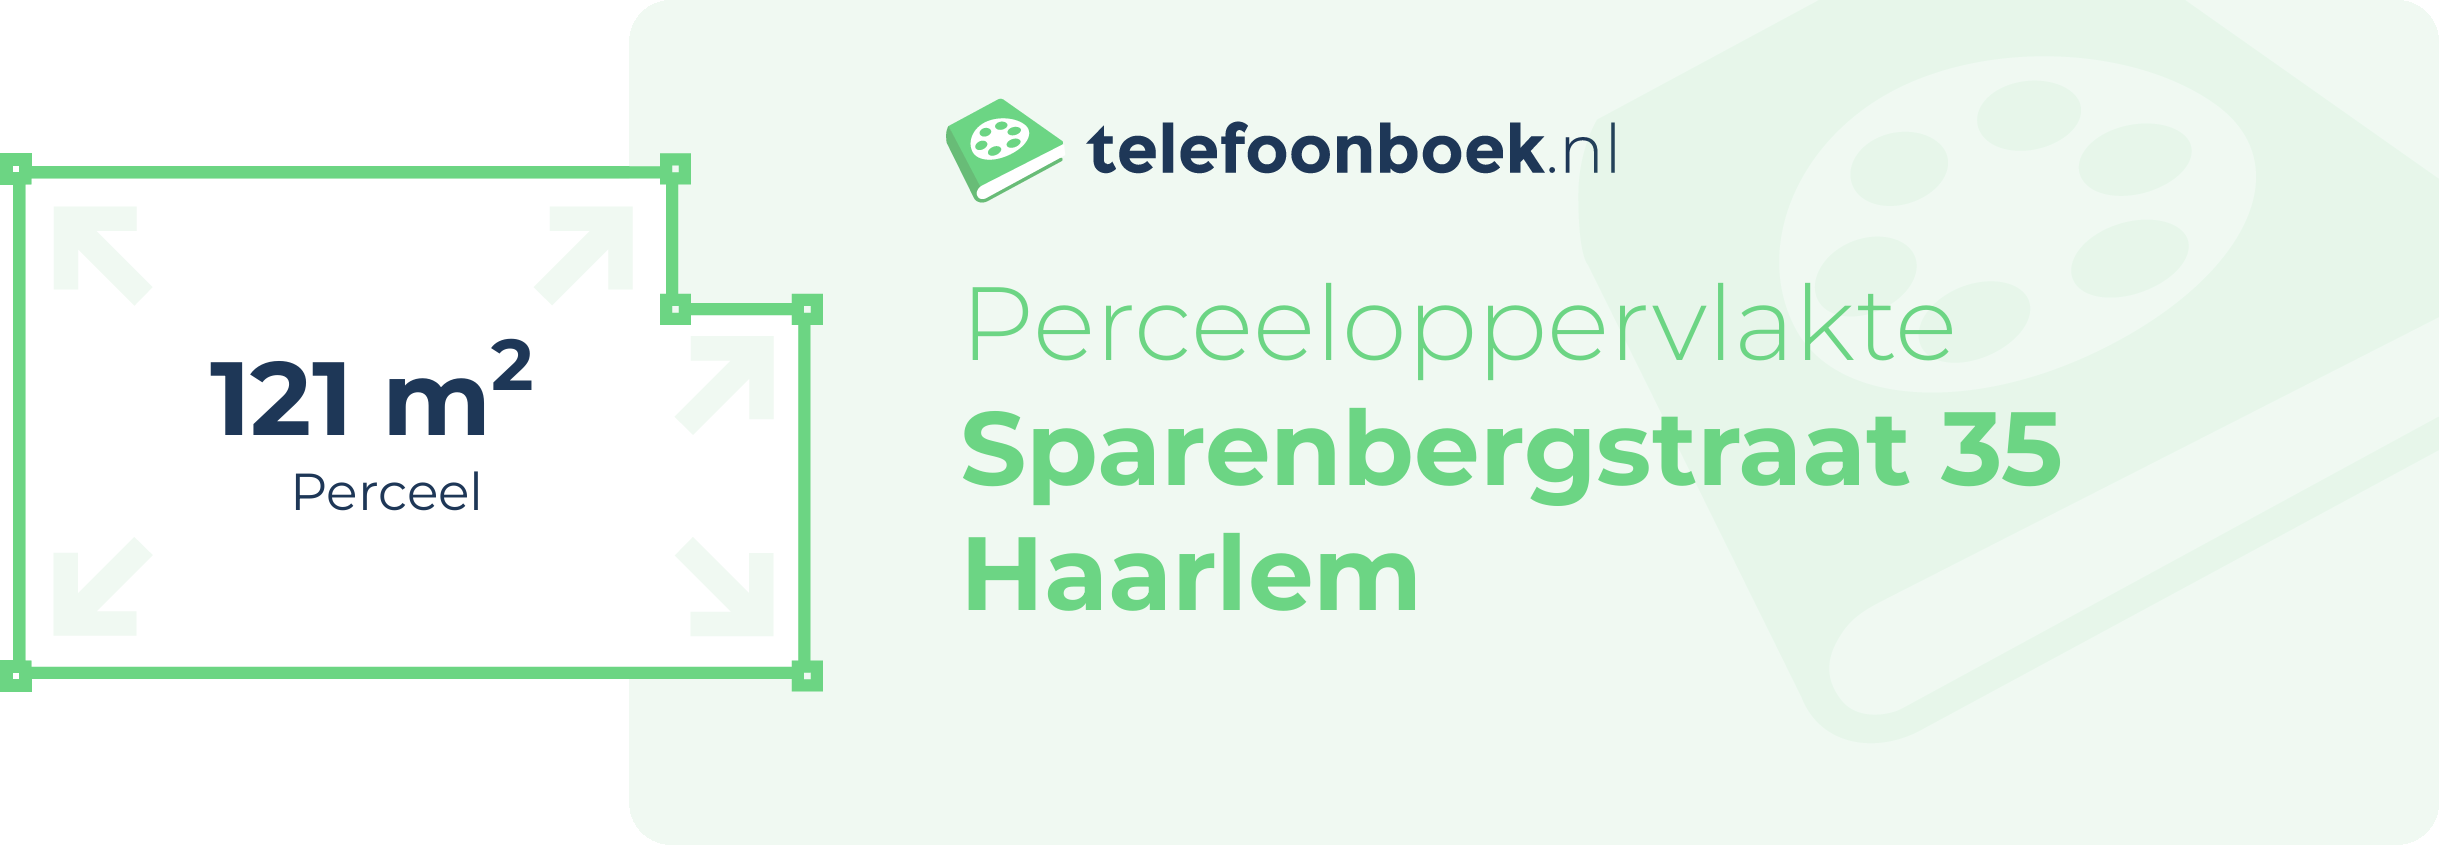 Perceeloppervlakte Sparenbergstraat 35 Haarlem